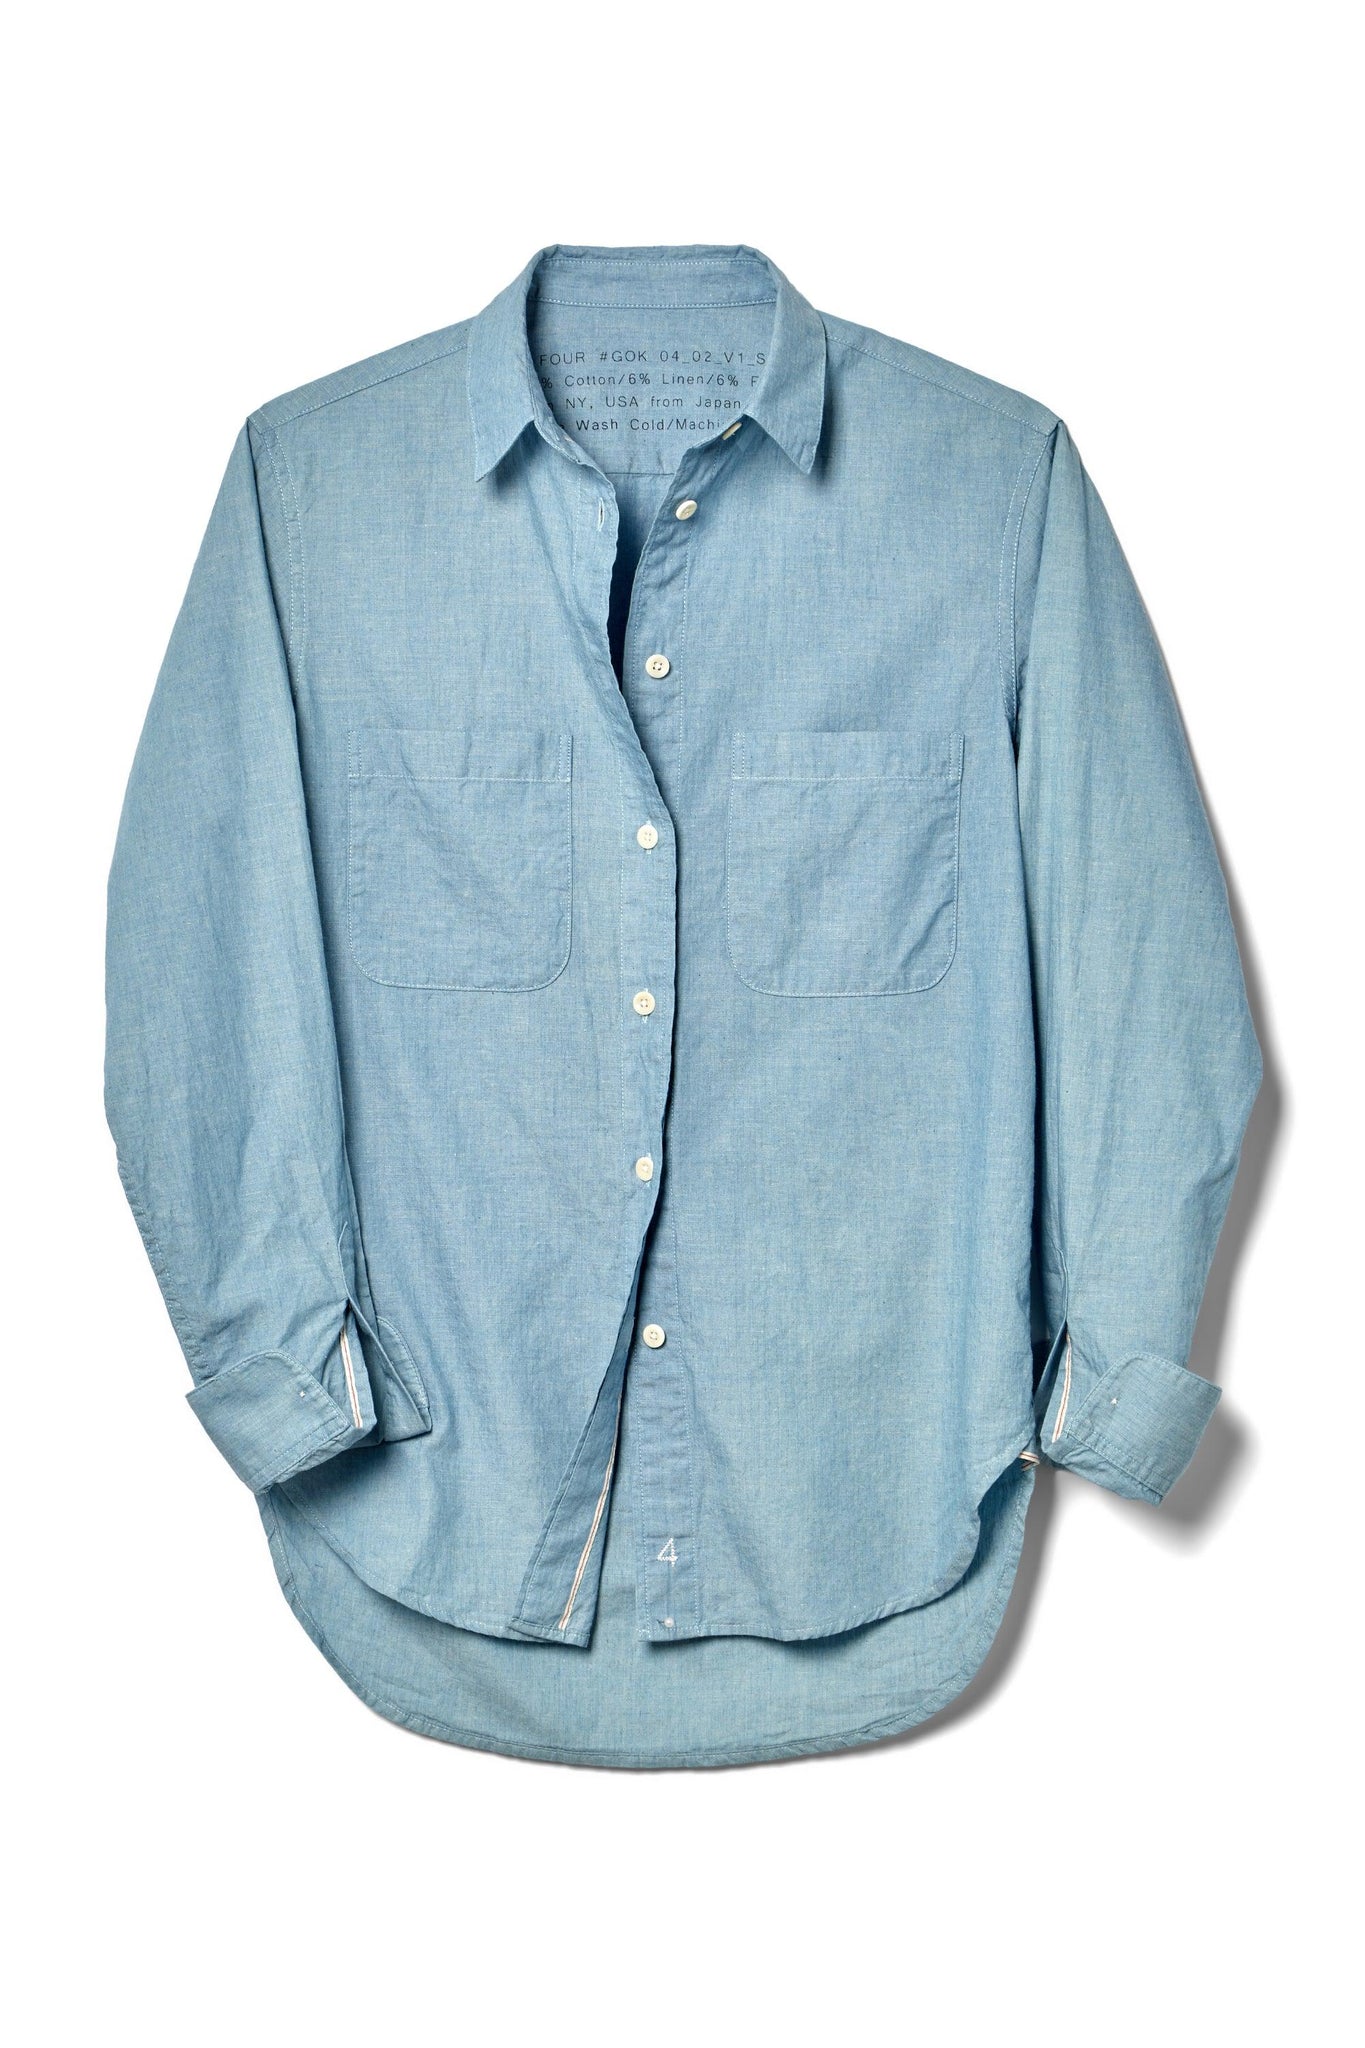 høg sikkerhedsstillelse fantastisk Work Shirt in organic cotton chambray, linen & rws merino – 4